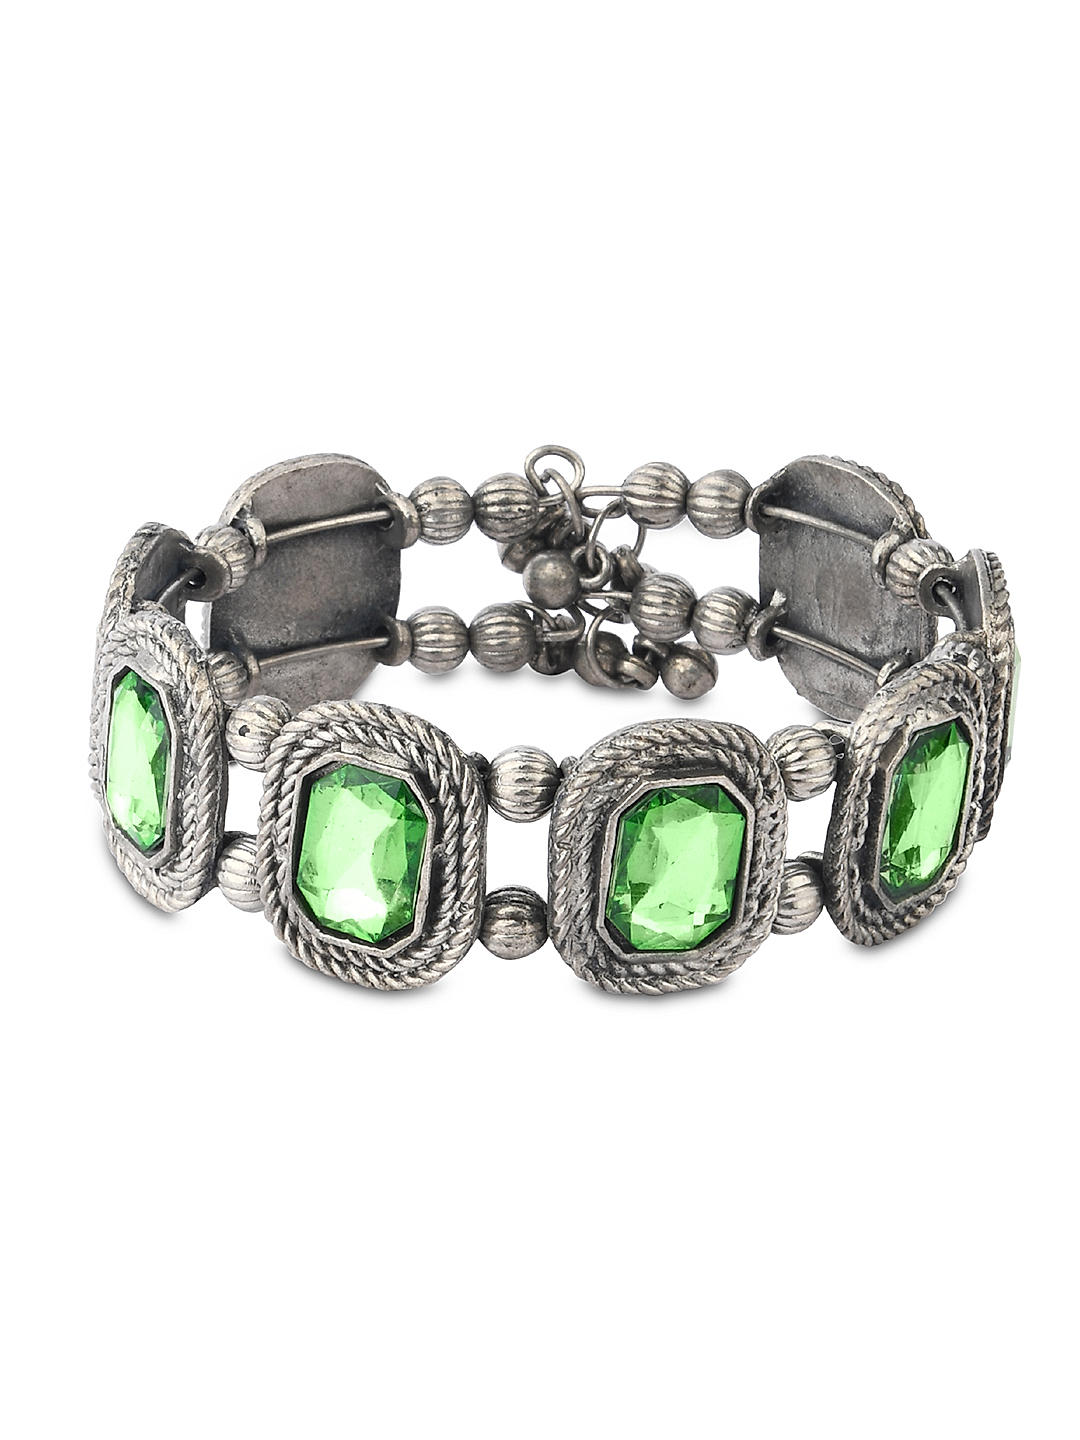 Bracelet black and green stone | Ale-Hop